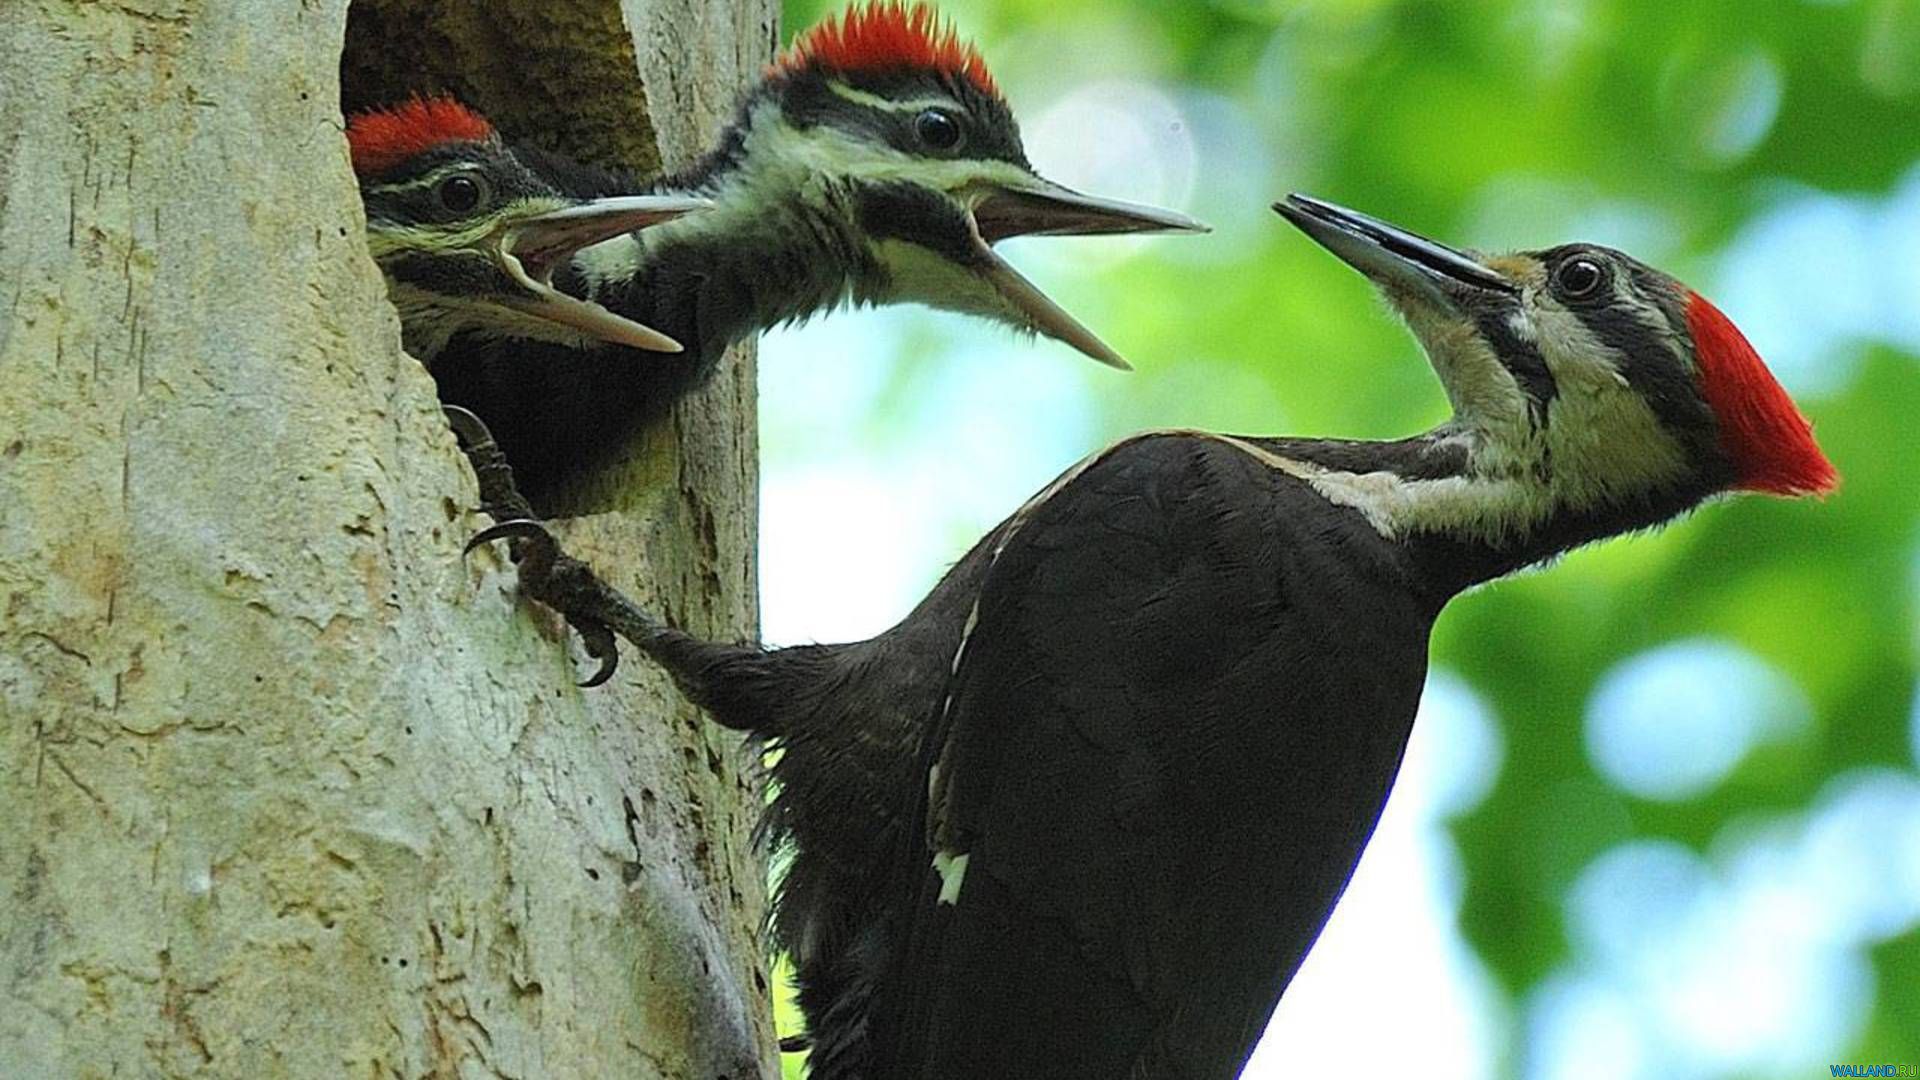 Feeding woodpecker chicks